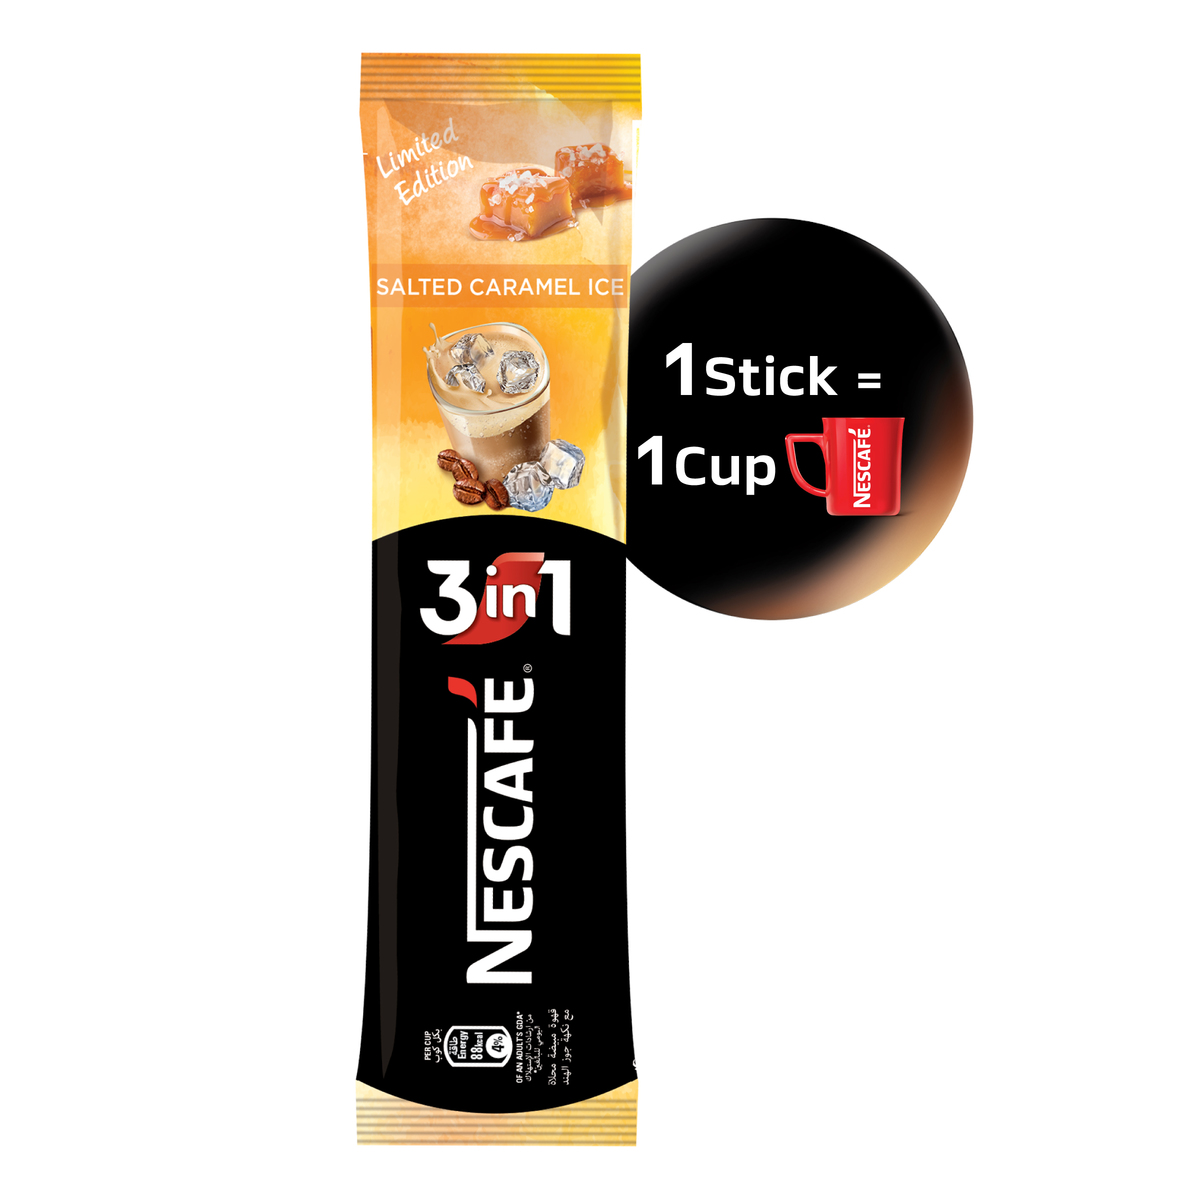 Nescafe 3in1 Salted Caramel Ice Coffee 20 x 21 g